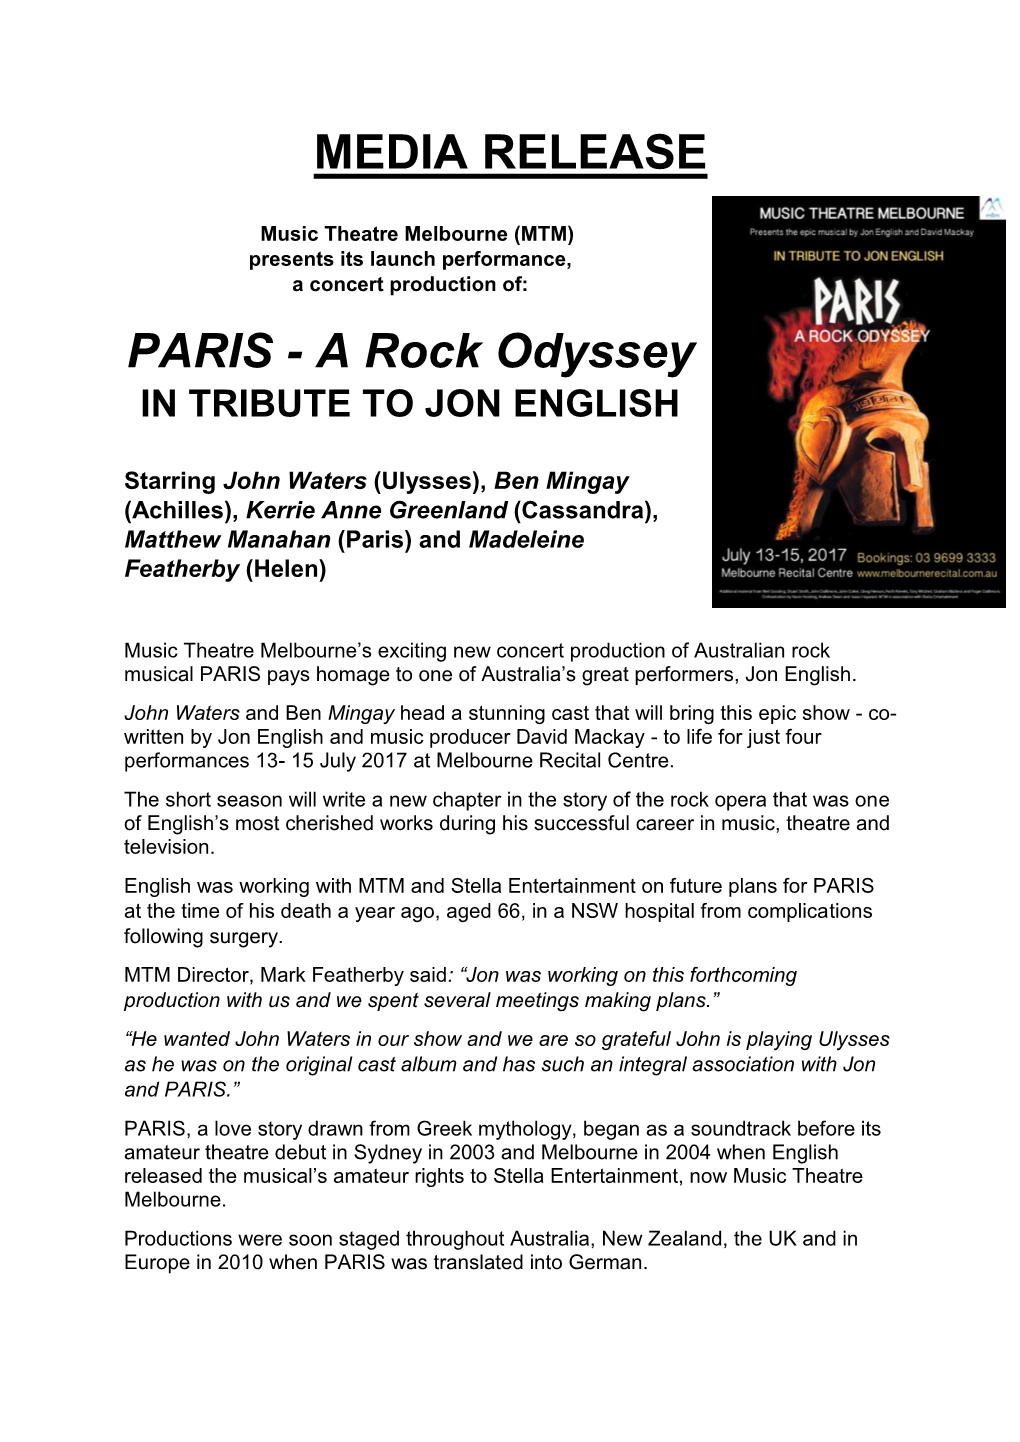 A Rock Odyssey in TRIBUTE to JON ENGLISH